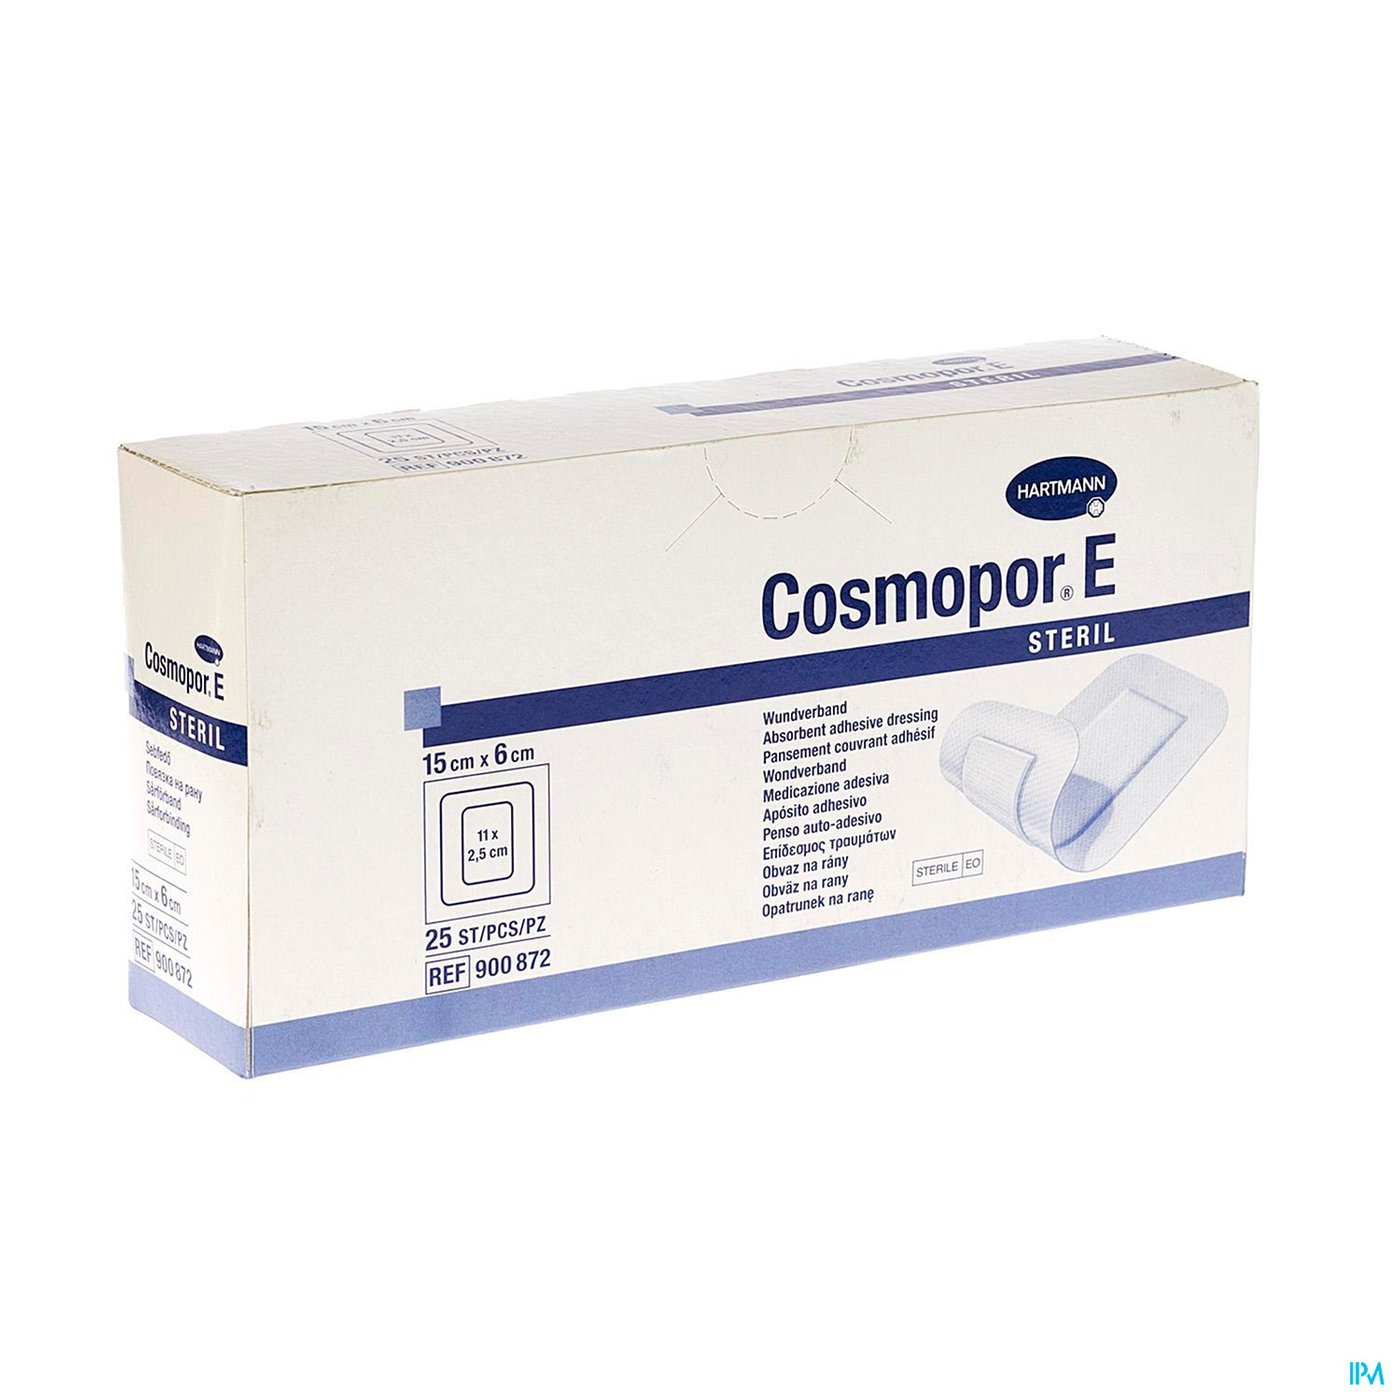 Cosmopor E Latexfree 15x6cm 25 P/s packshot